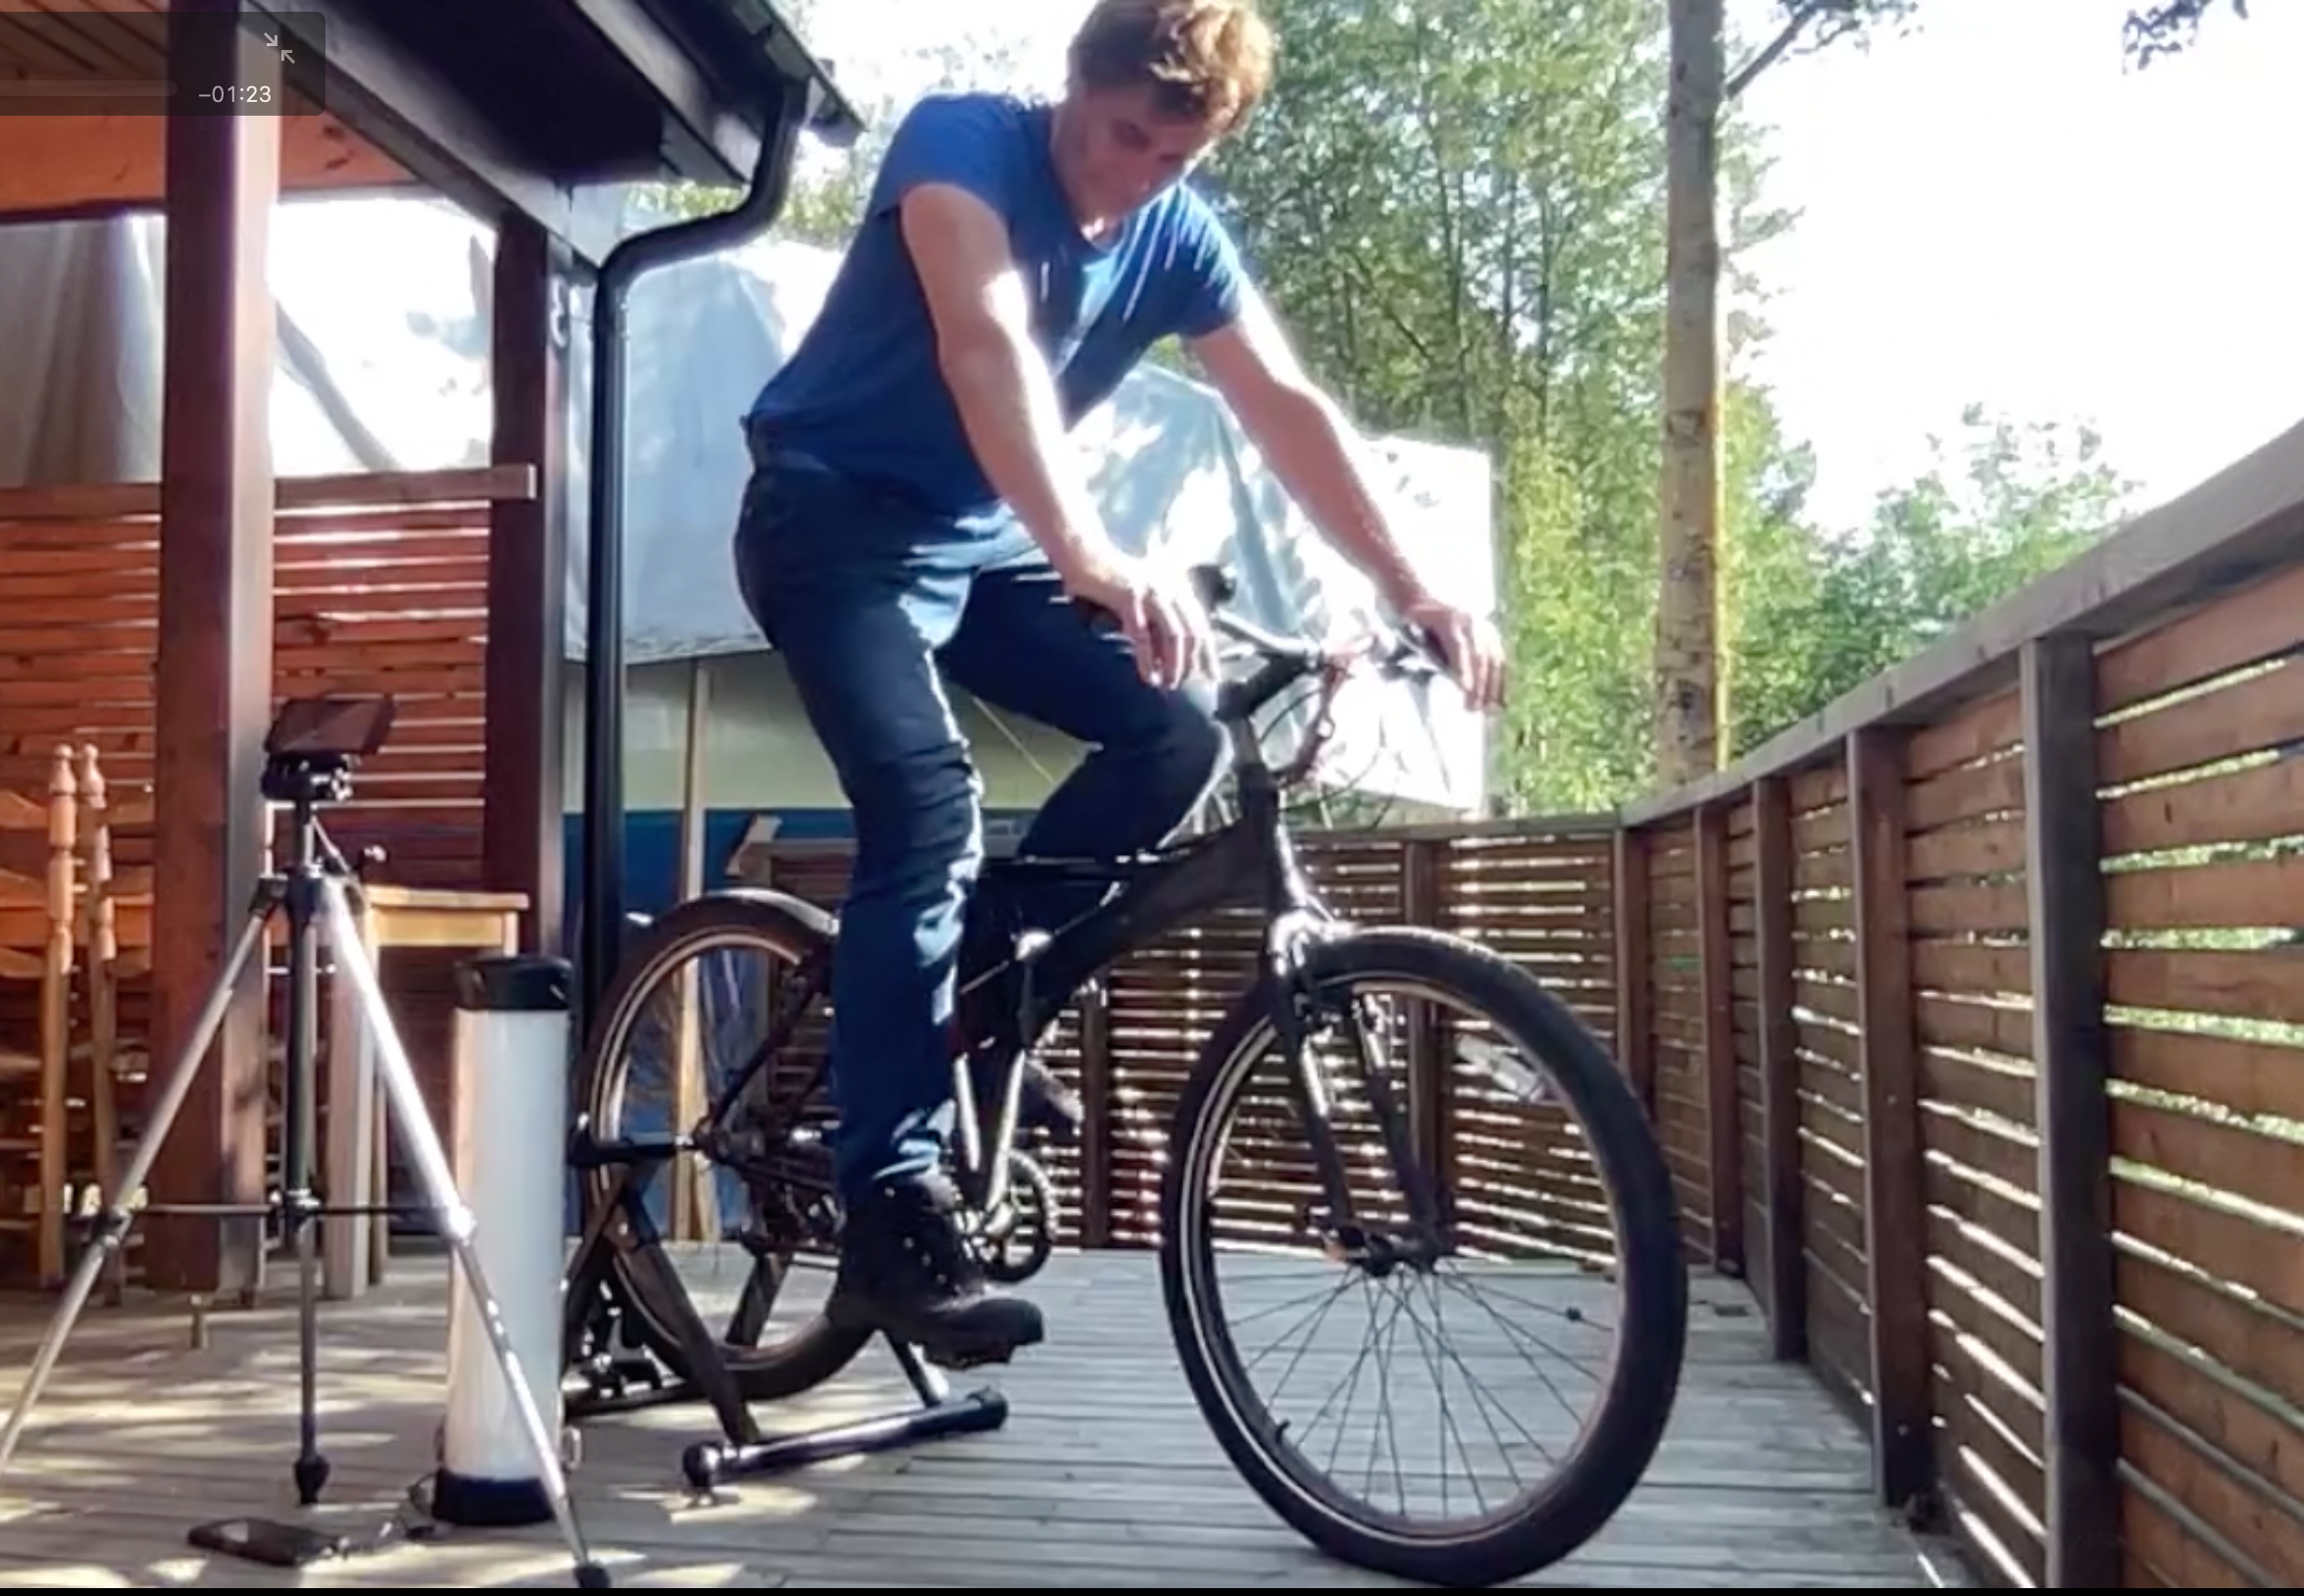 bike on generator station with rider